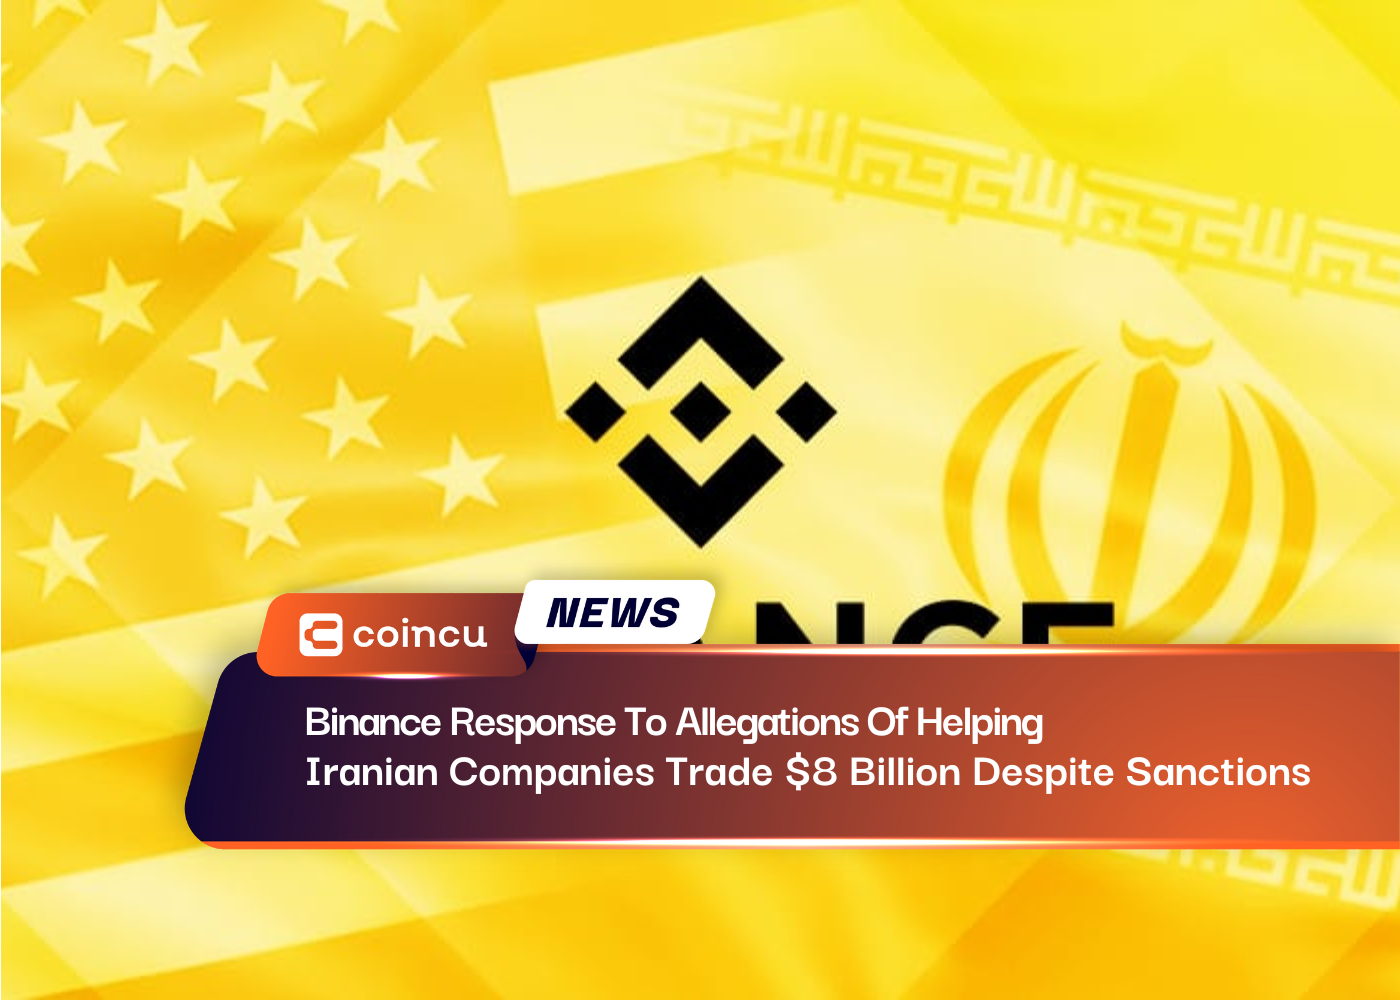 Binance Response To Allegations Of Helping Iranian Companies Trade $8 Billion Despite Sanctions